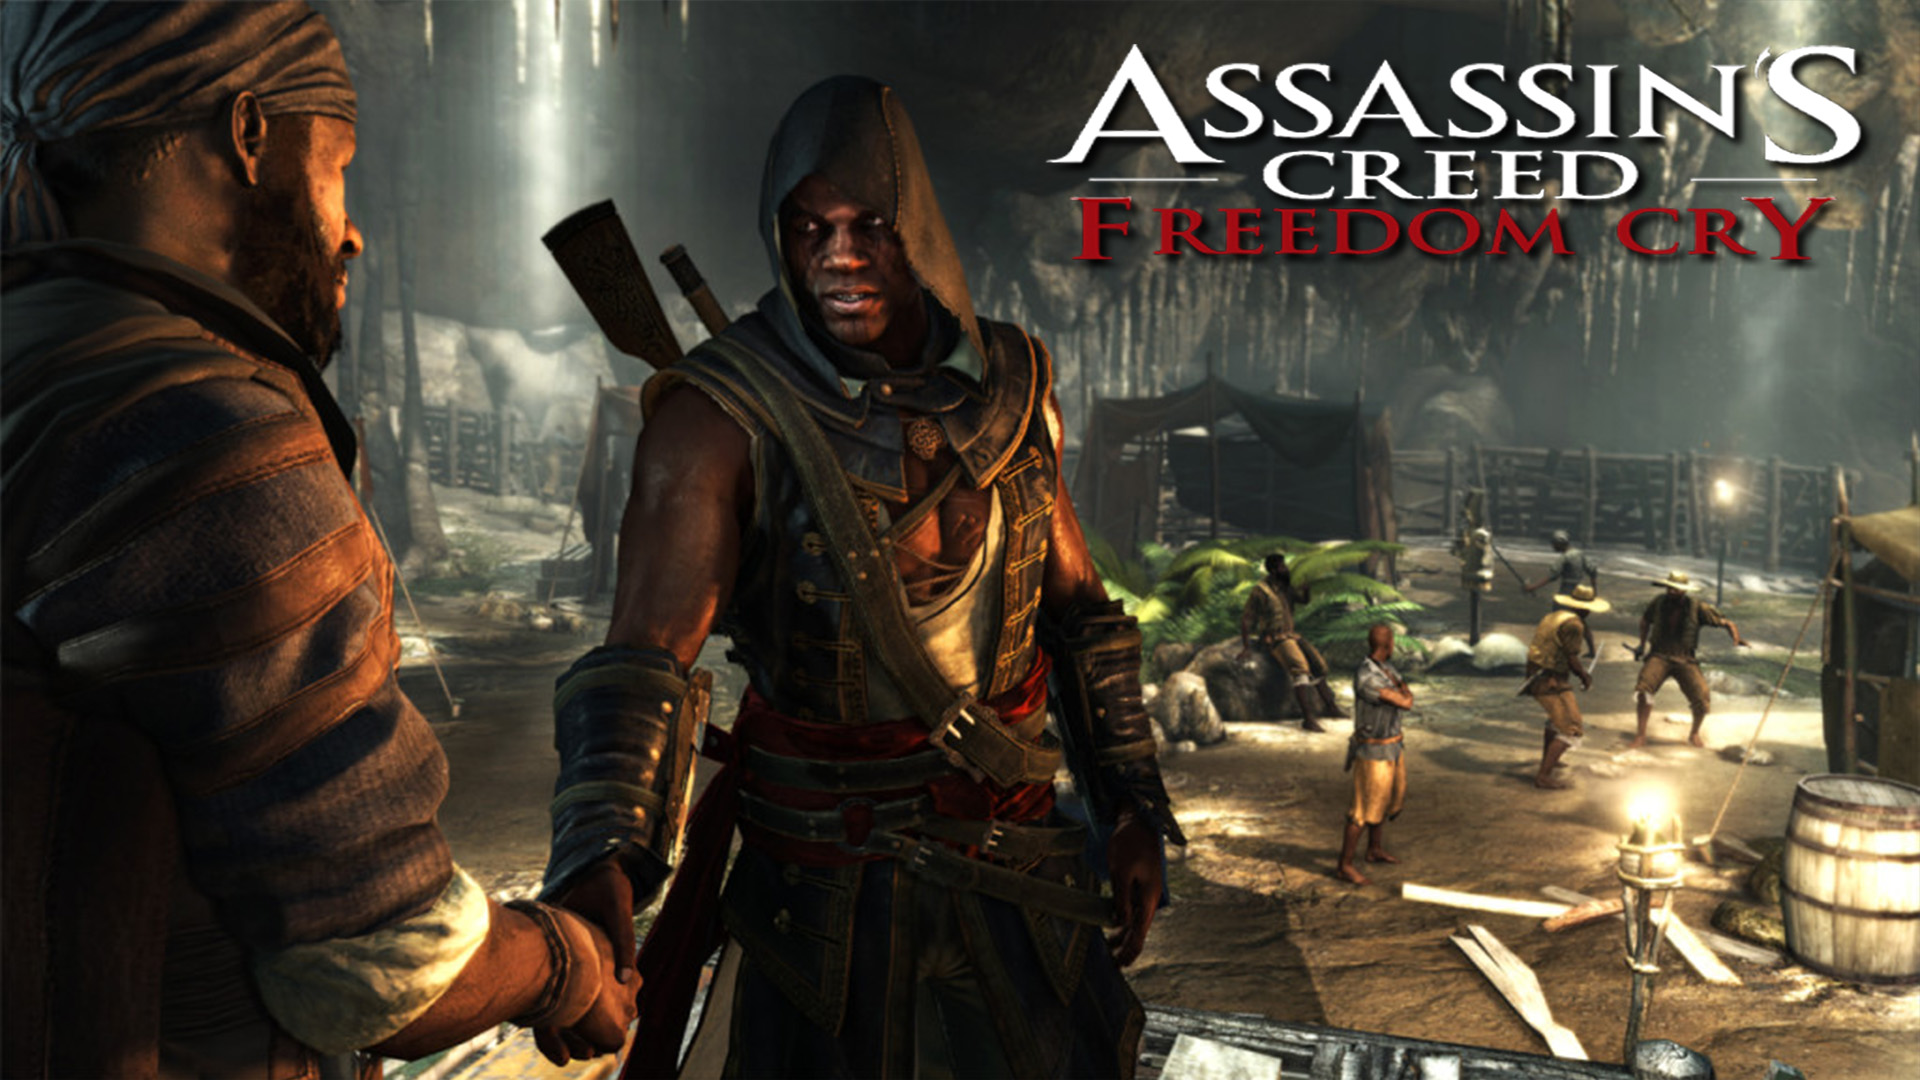 Скачать обои бесплатно Видеоигры, Кредо Ассасина, Assassin's Creed Iv: Чёрный Флаг картинка на рабочий стол ПК